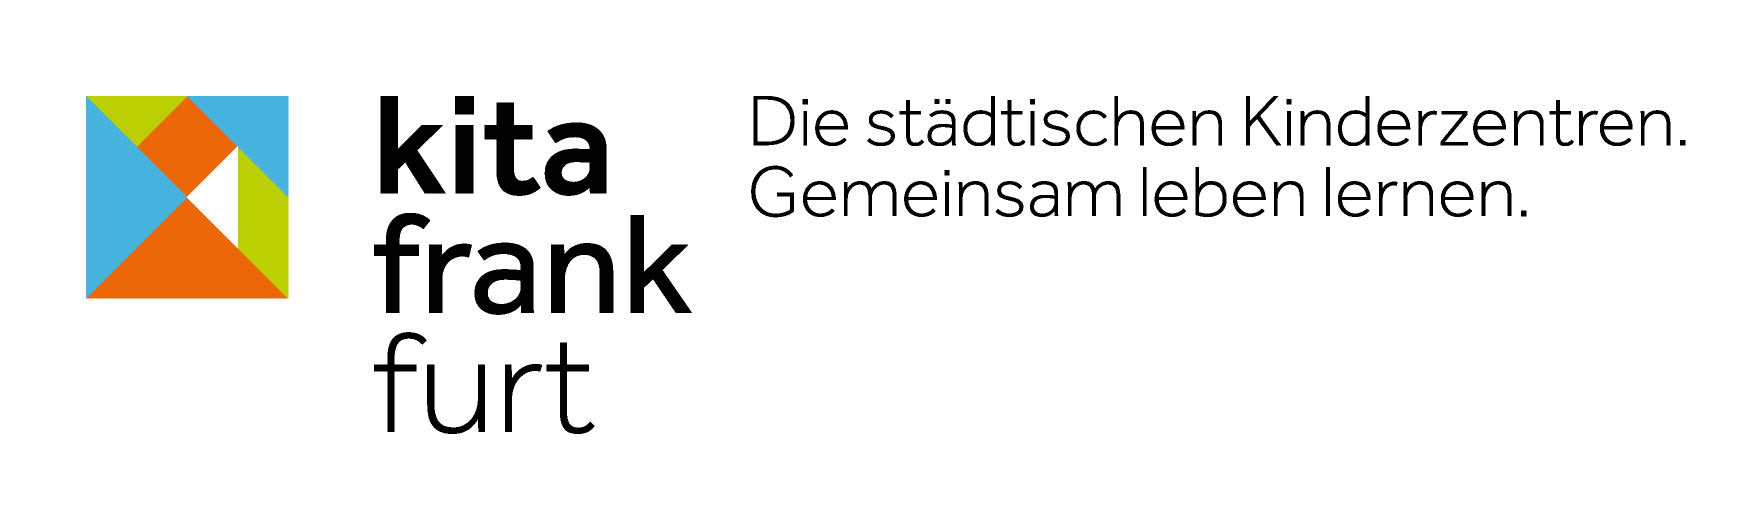 Das Logo der Kita Frankfurt. 